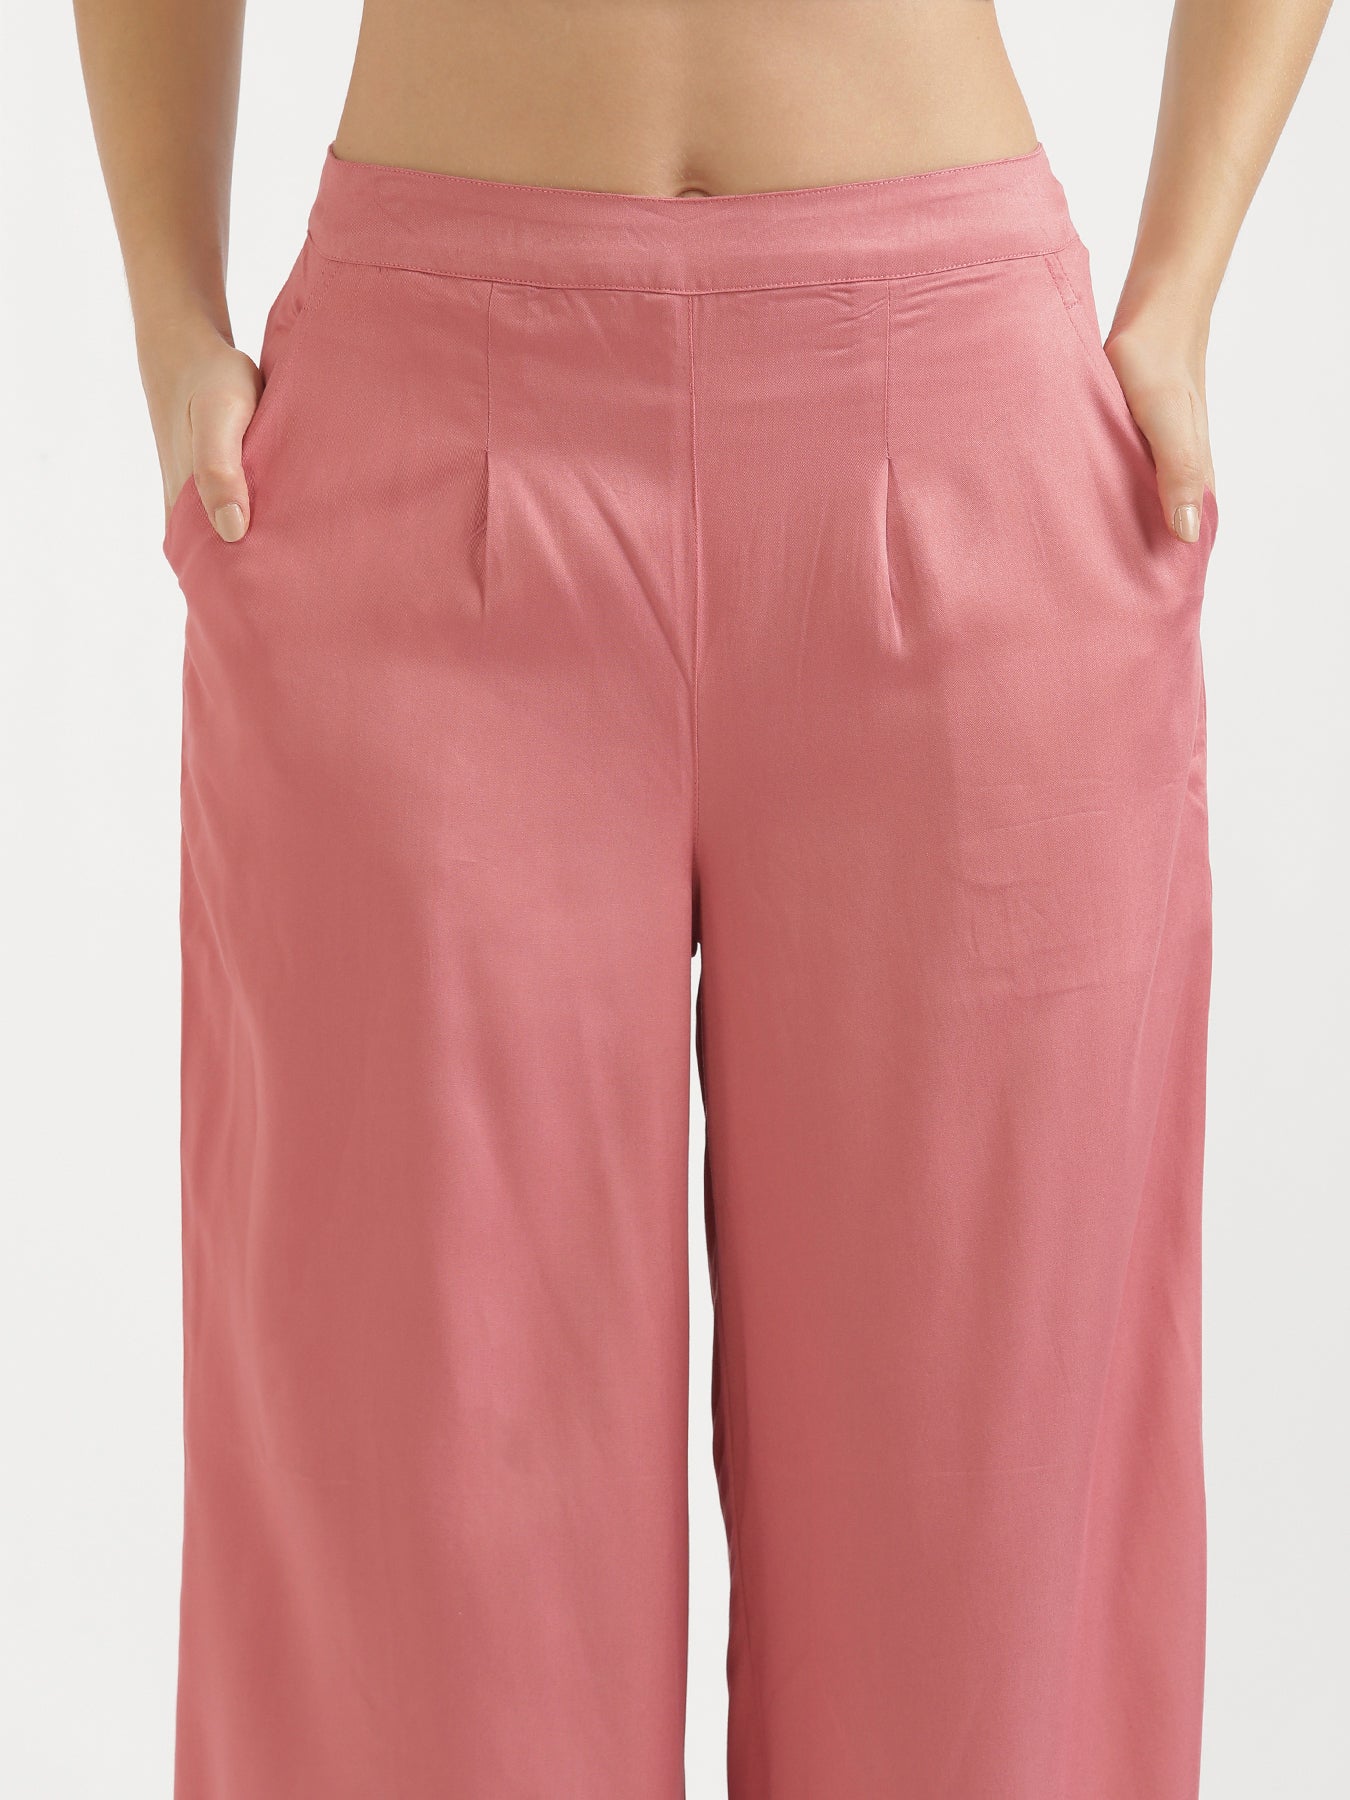 HUPOM Palazzo Pants For Women Casual Womens Pants Standard Mid Waist Rise  Short Straight-Leg Green M - Walmart.com